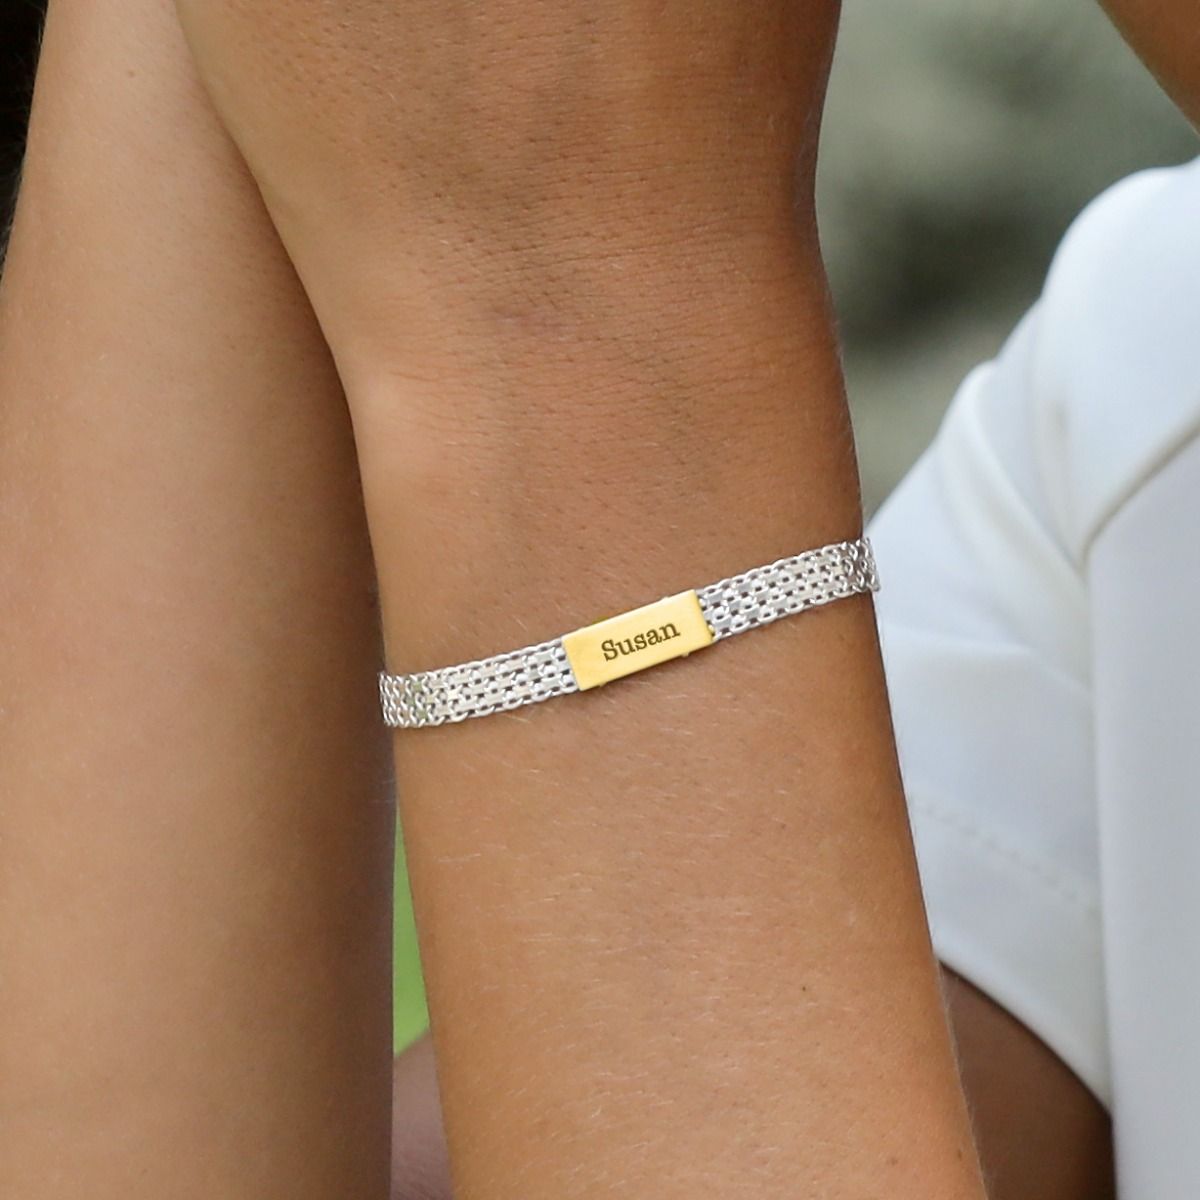 MIA - delicate custom engraved bracelet - by Judith & Jules